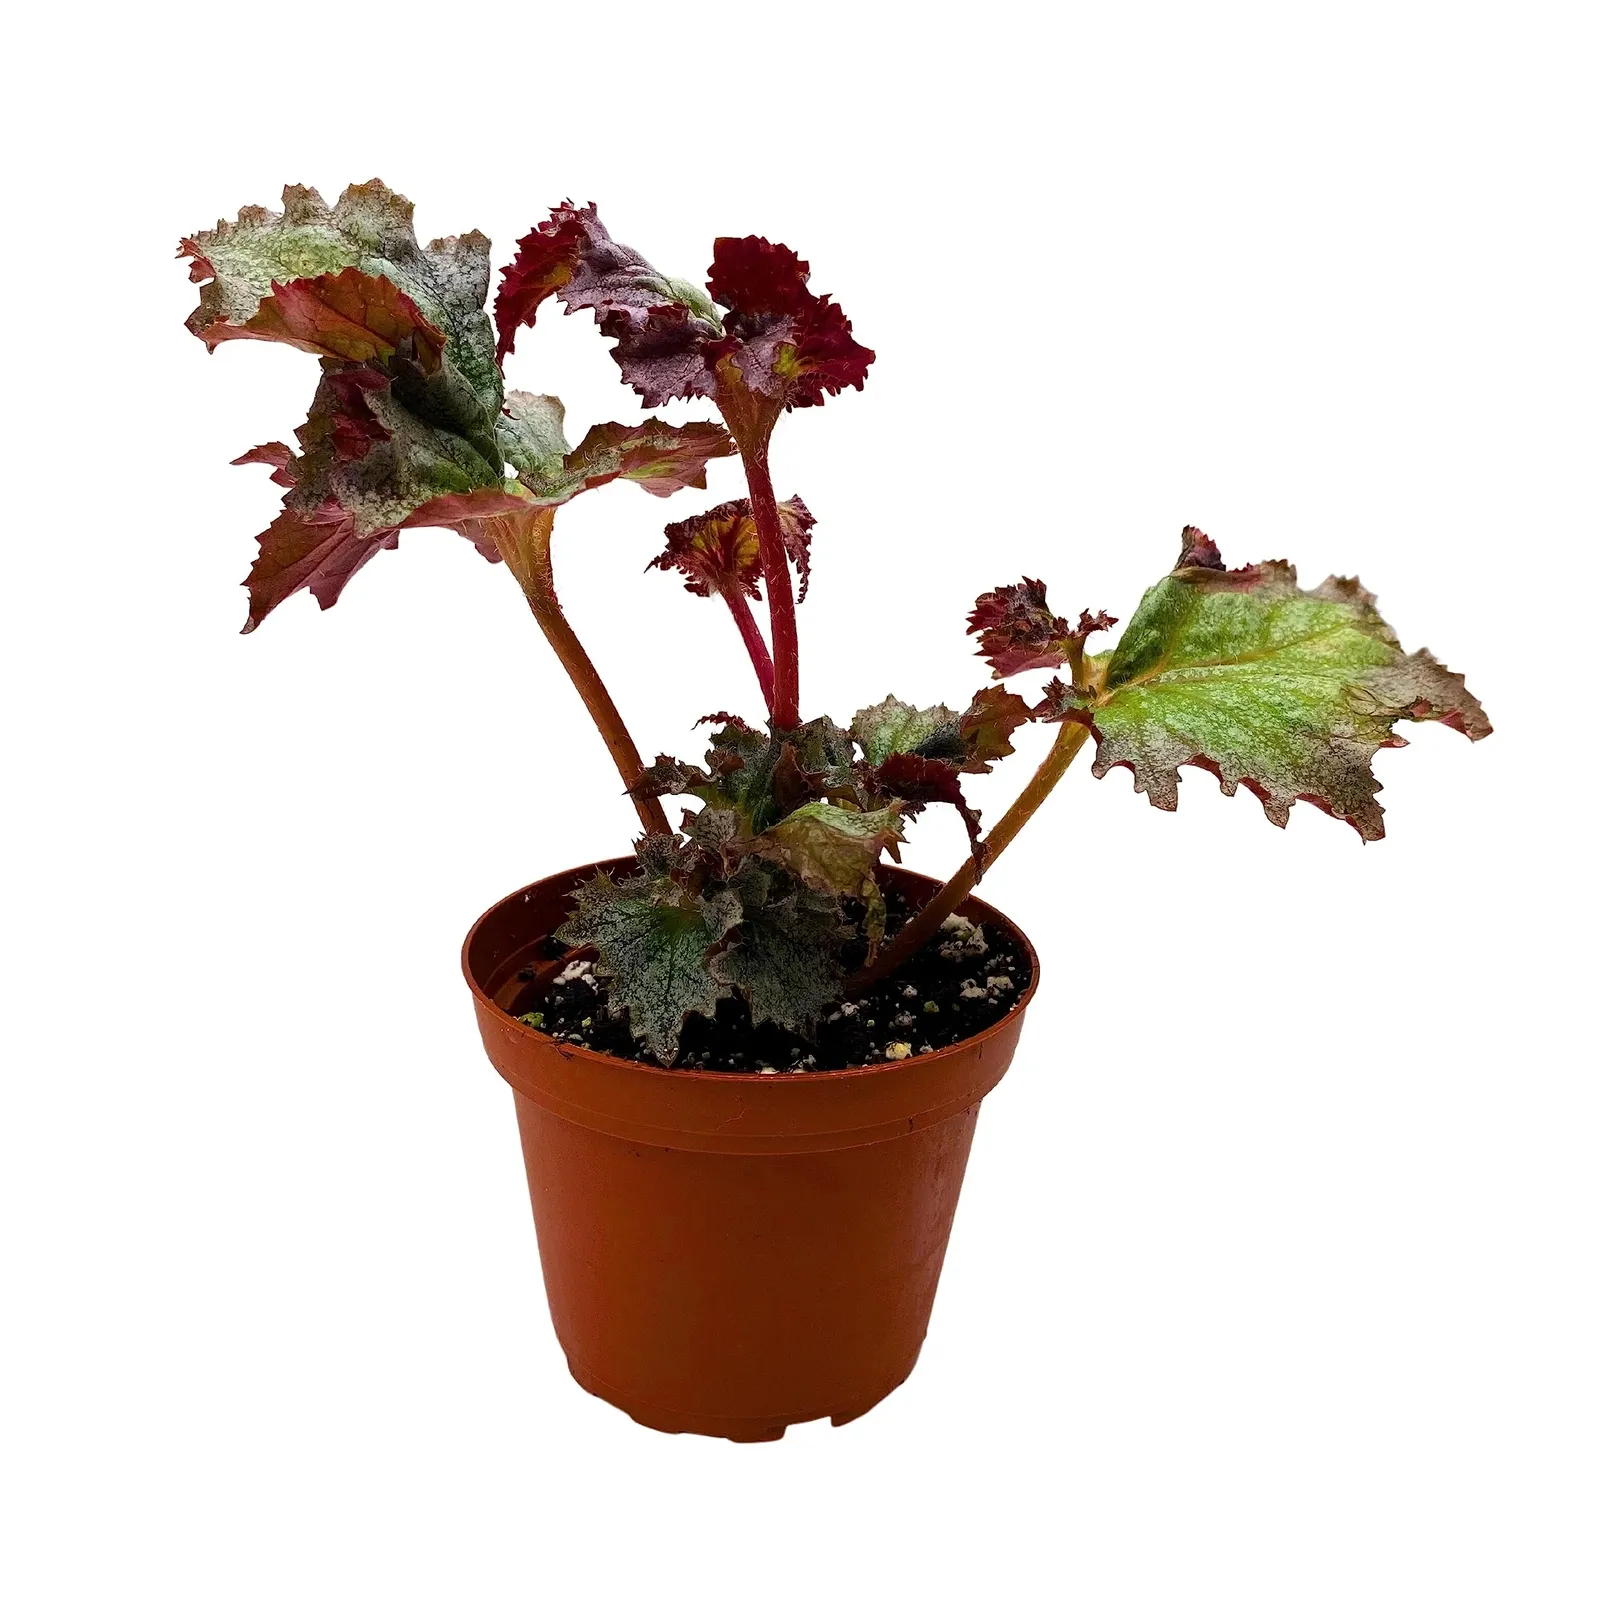 Daehnerys Begonia Begonia Rex 4 in Pot Painted-Lea - $33.75